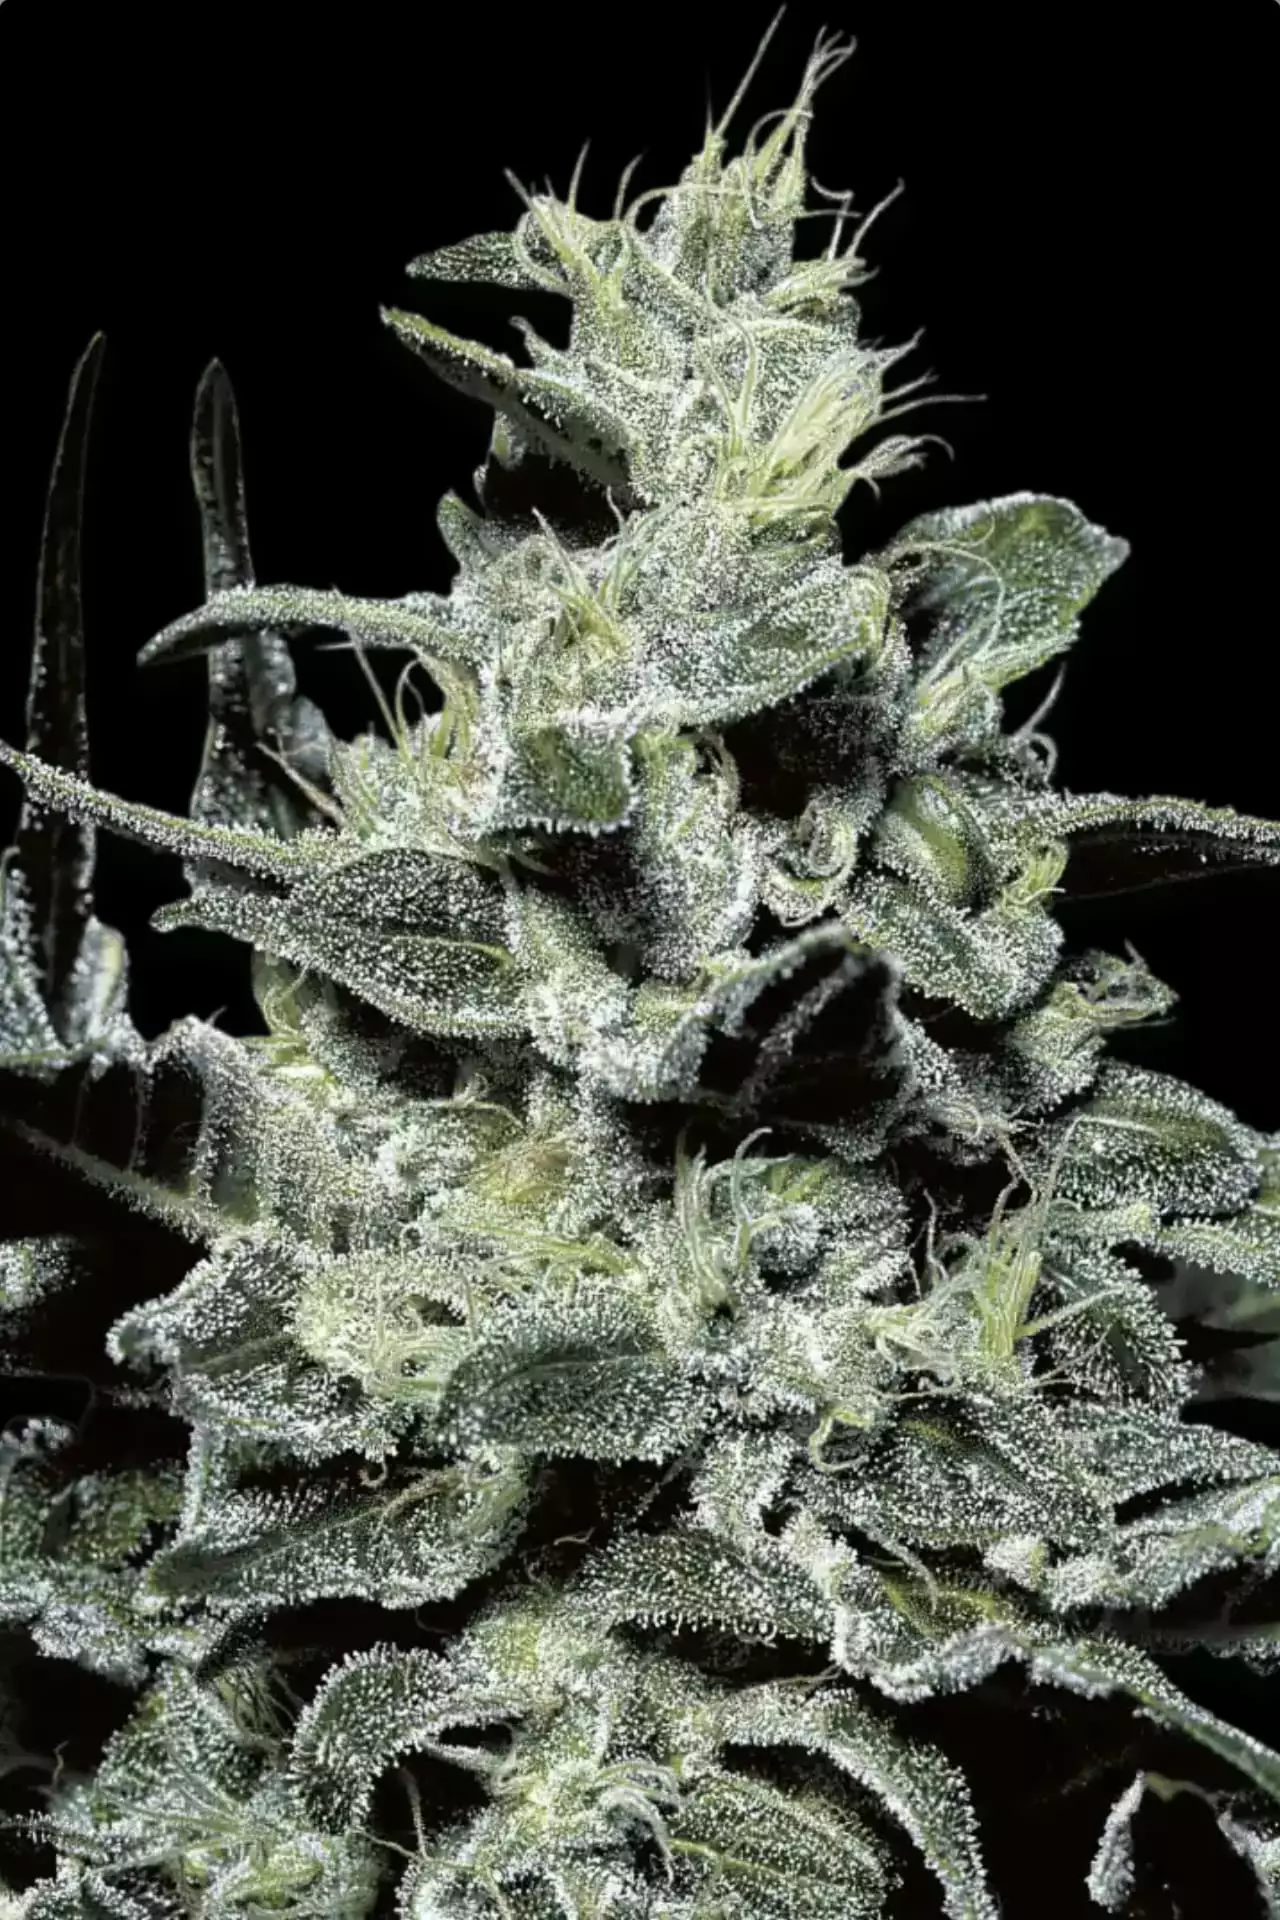 Nebula cannabis strain photo with a black background